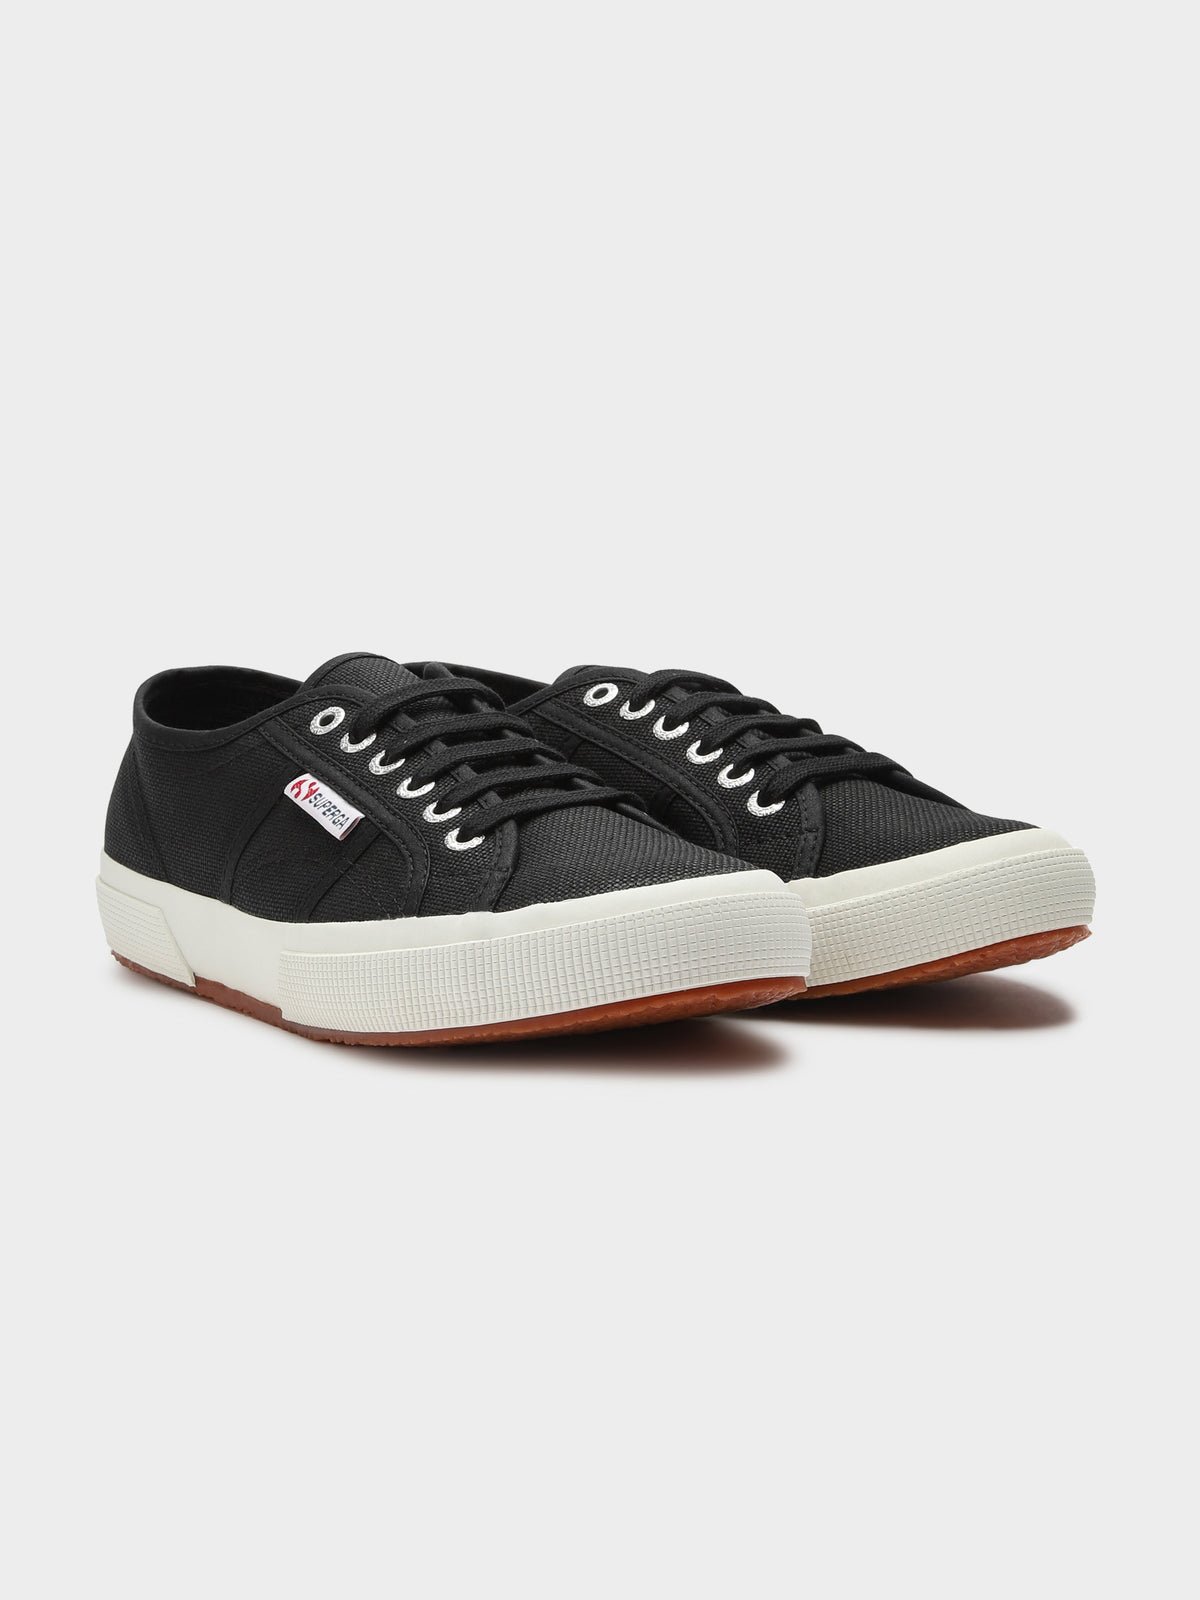 Unisex 2750 Cotu Classic Sneakers in Black